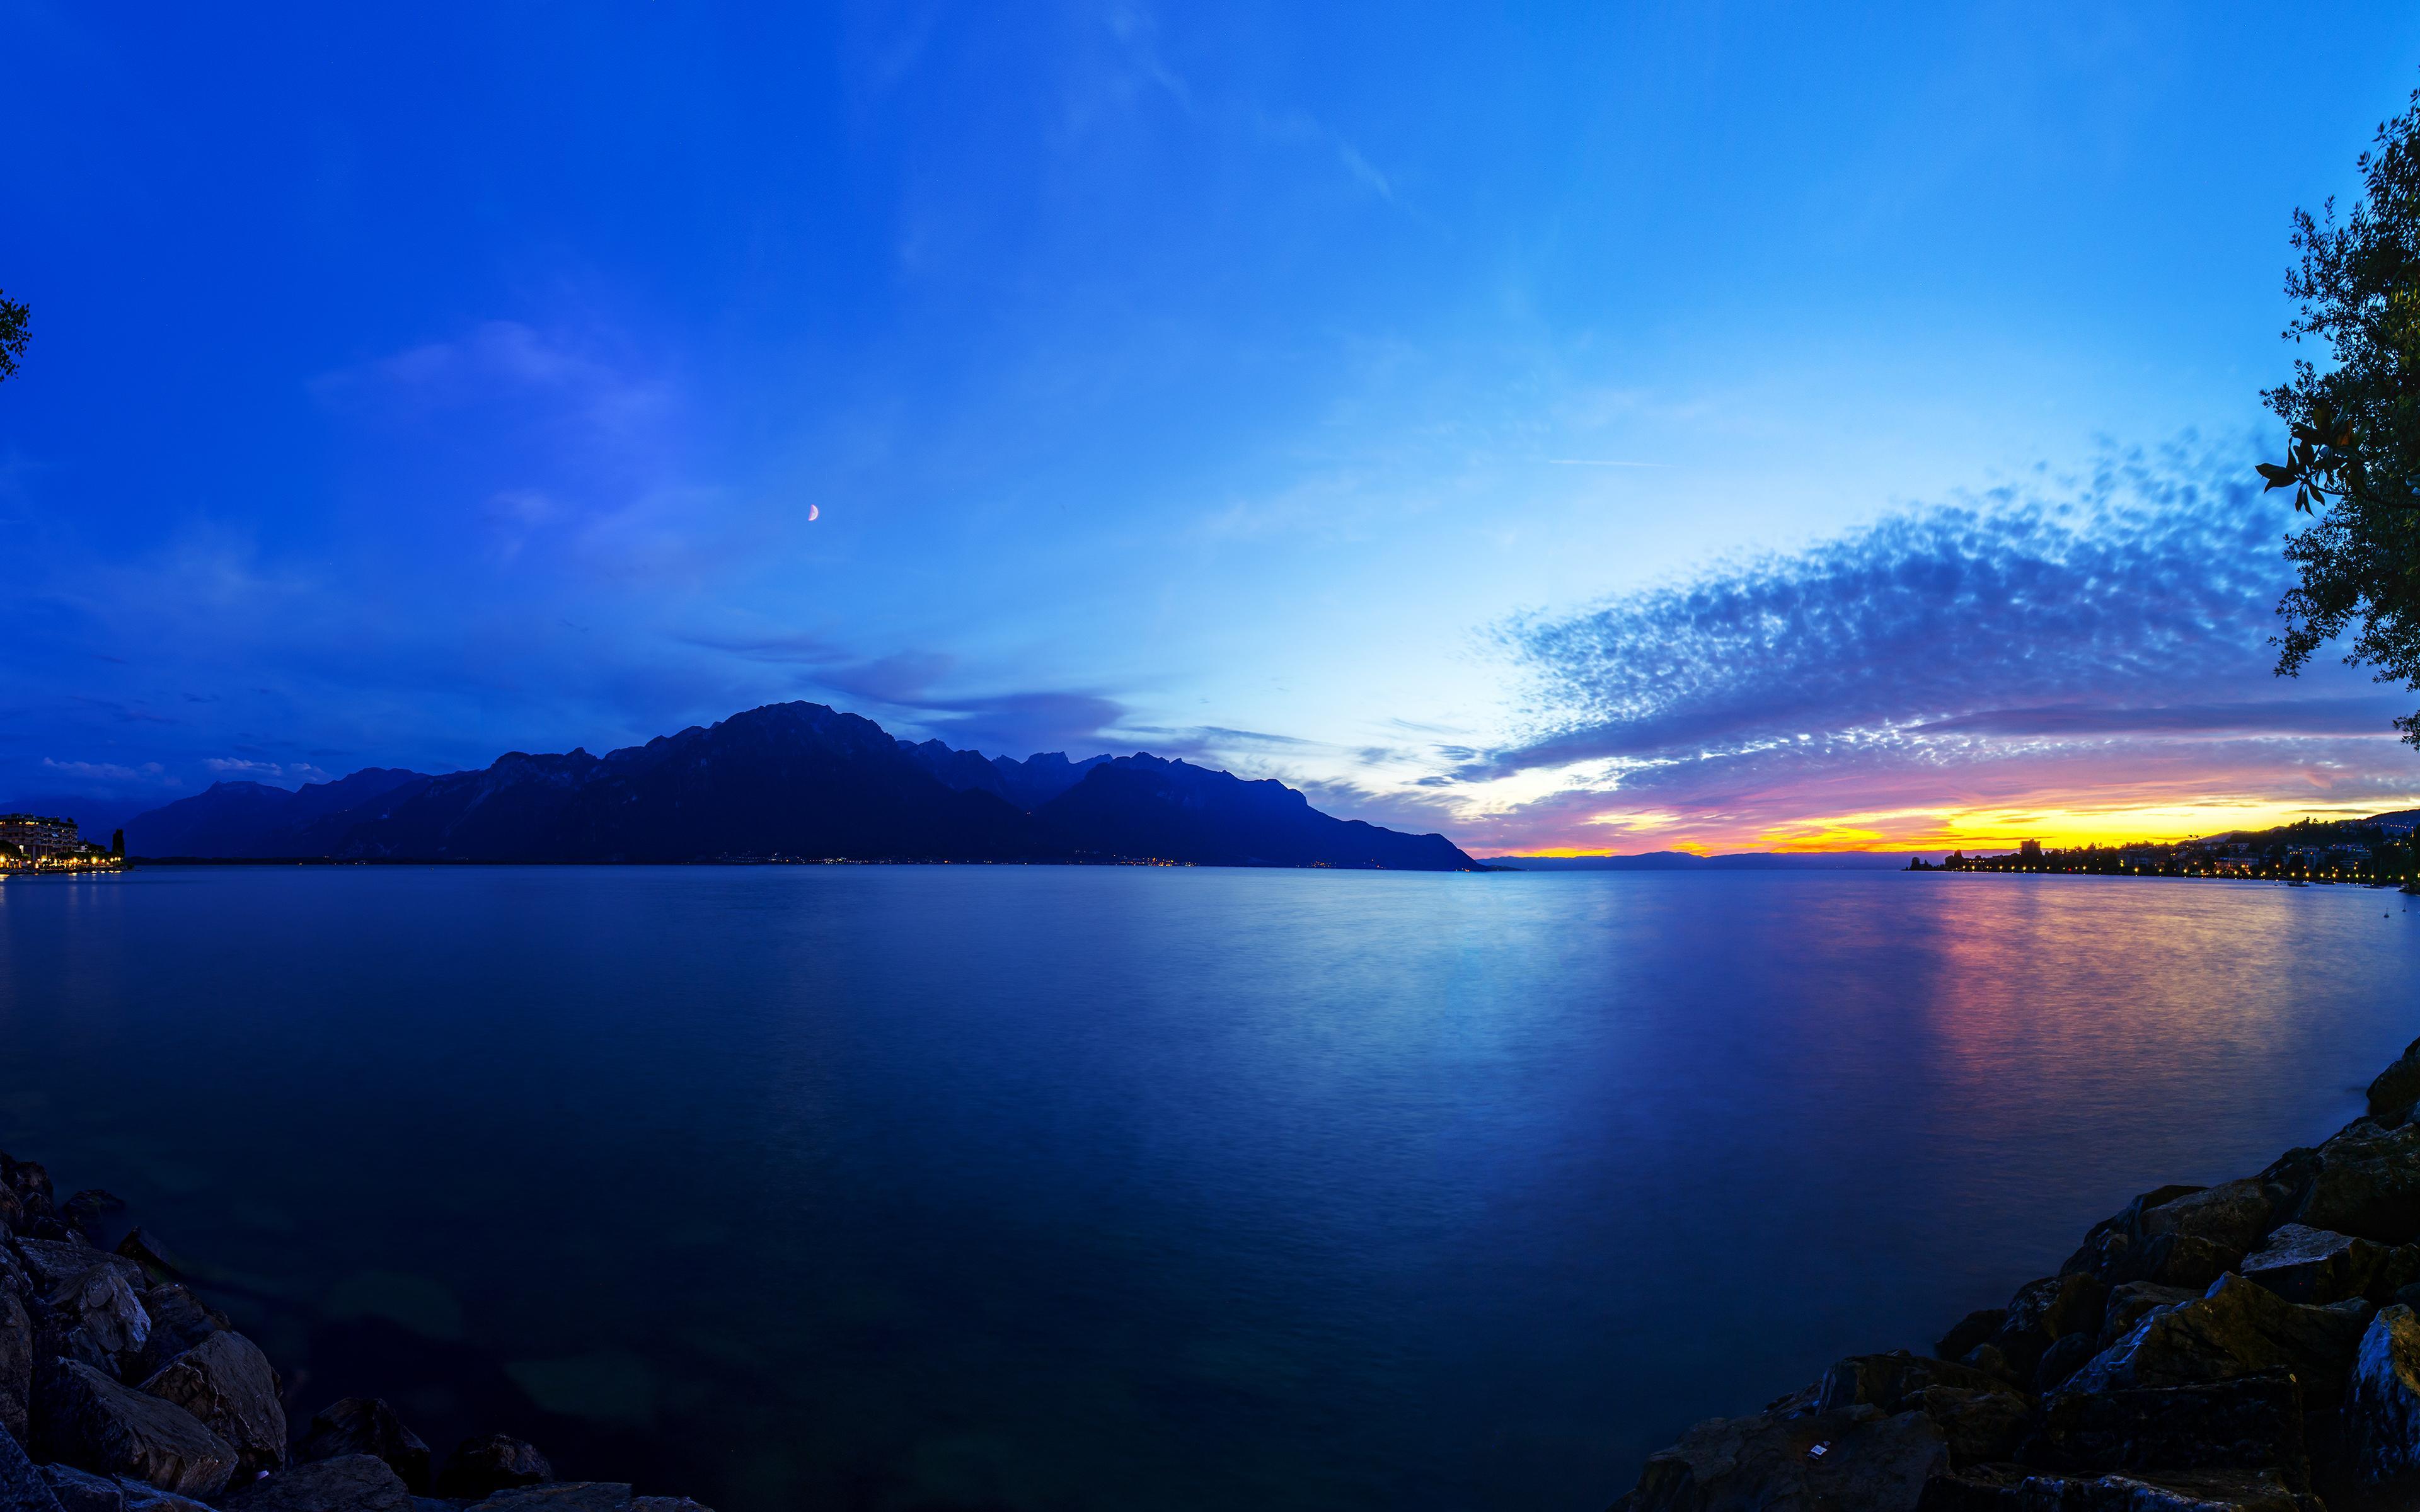 Beautiful Lake Geneva, Switzerland wallpaper and image, picture, photo